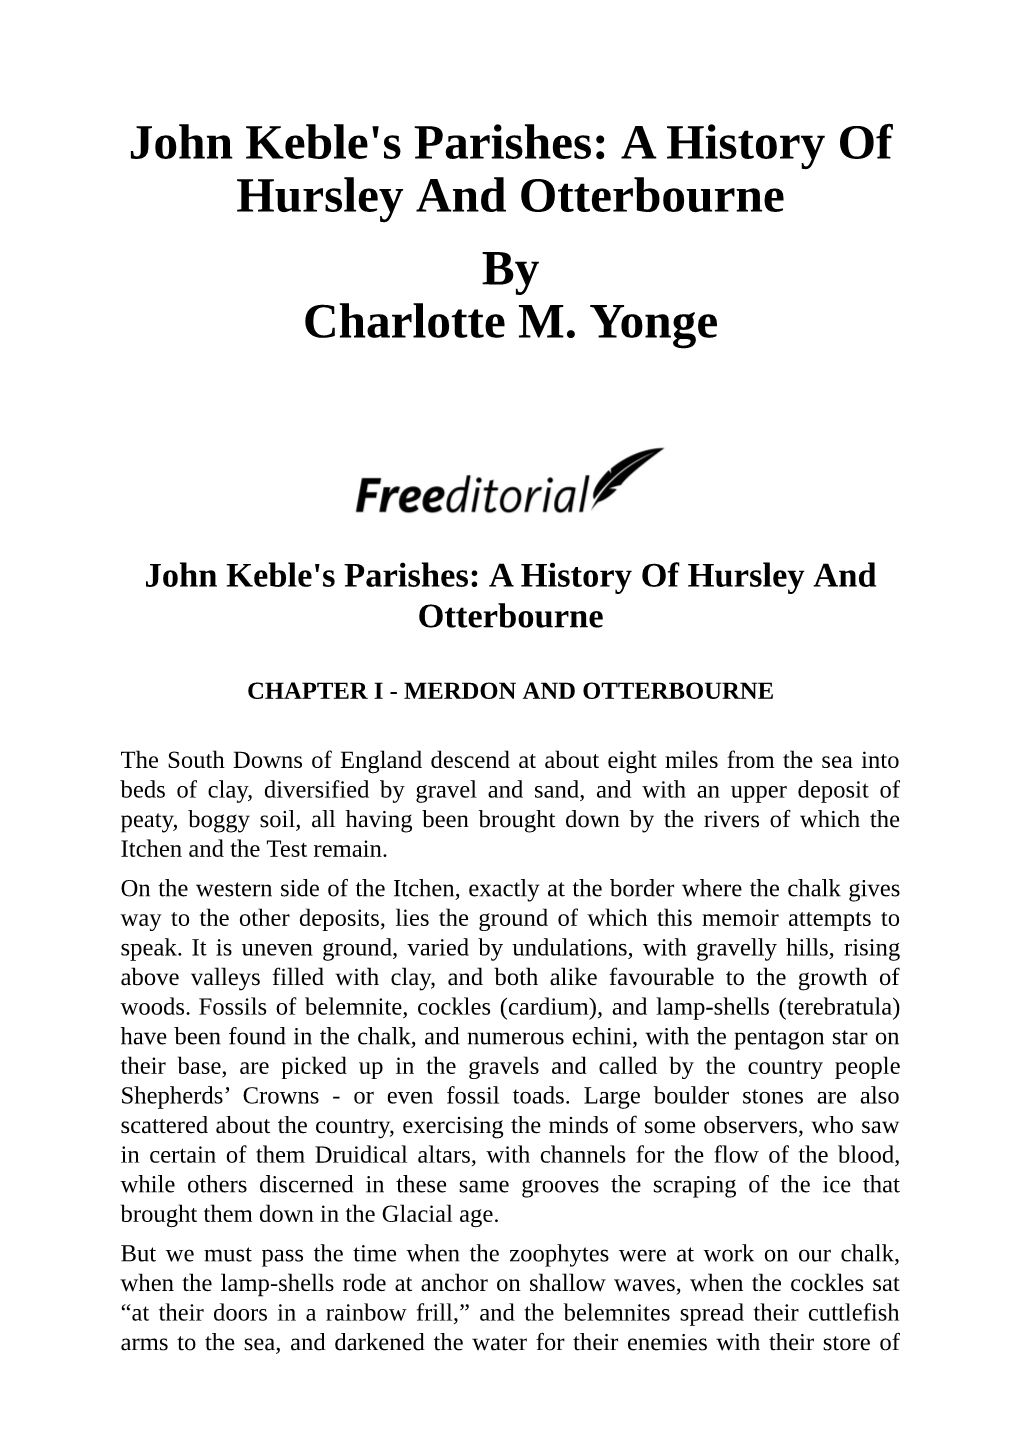 John Keble's Parishes a History of Hursley and Otterbourne